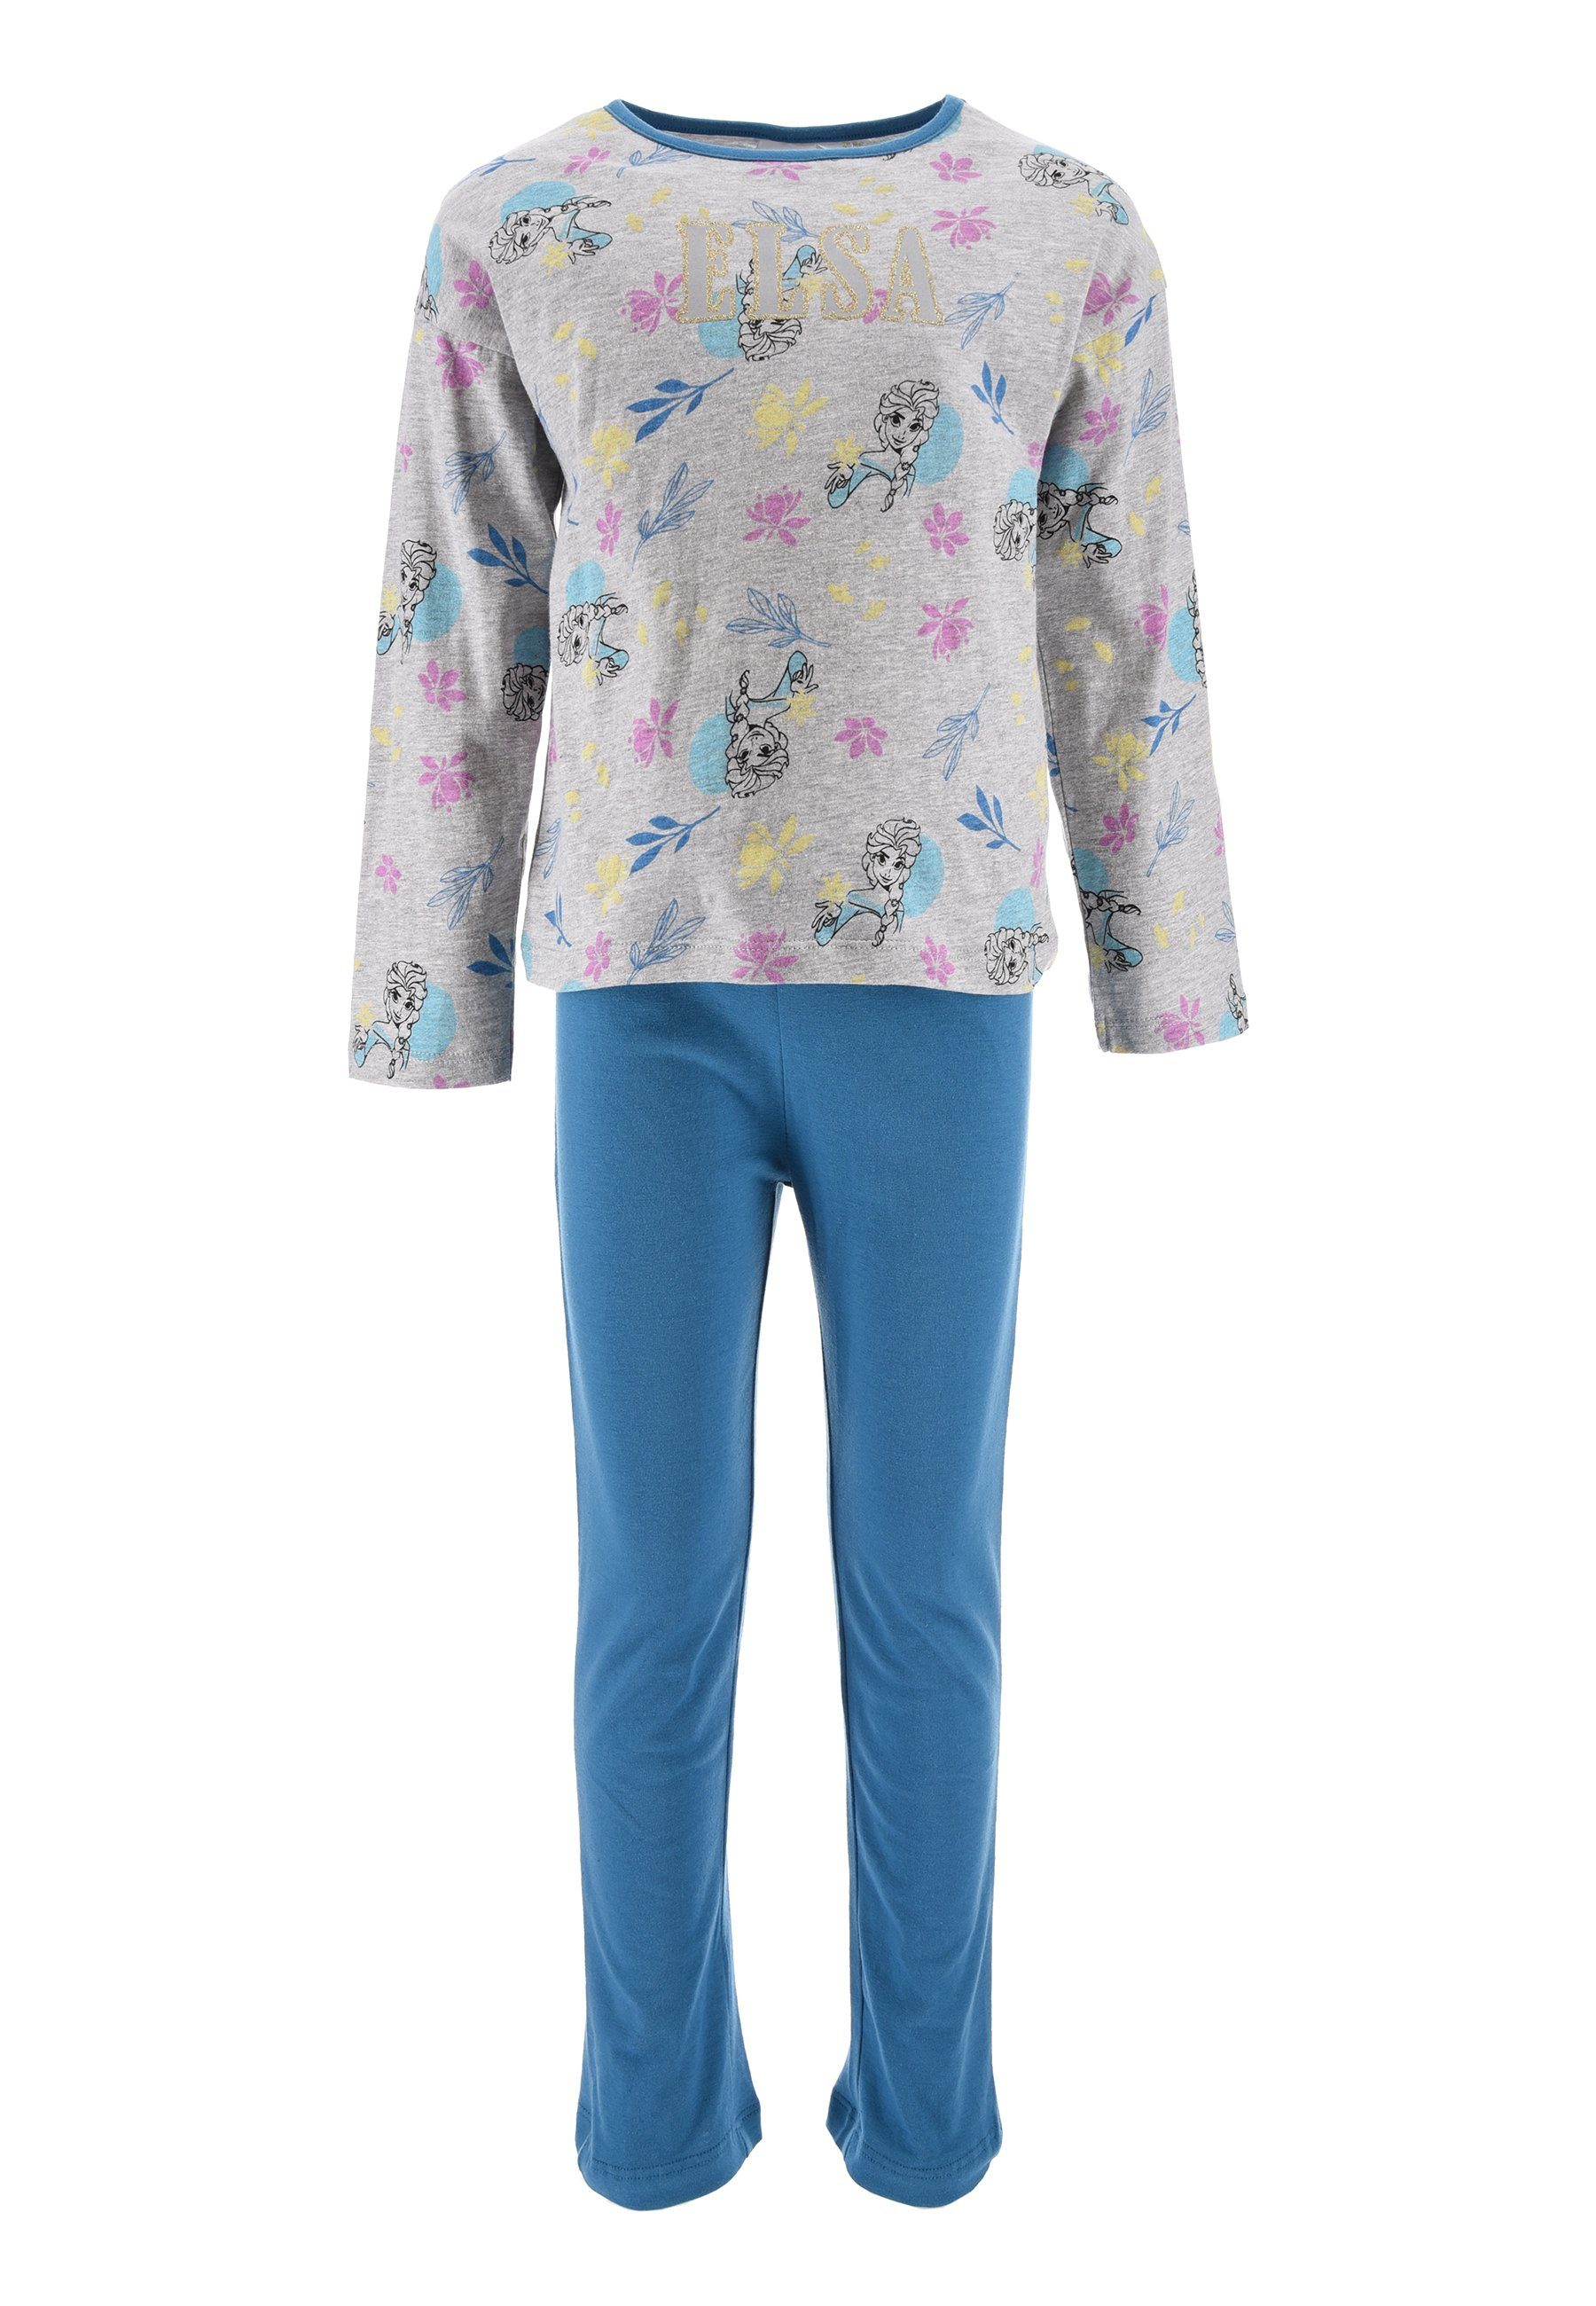 Schlafanzug + Shirt Eiskönigin Pyjama (2 Mädchen Langarm Grau Frozen Schlaf-Hose Kinder Schlafanzug Kinder tlg) Elsa Disney